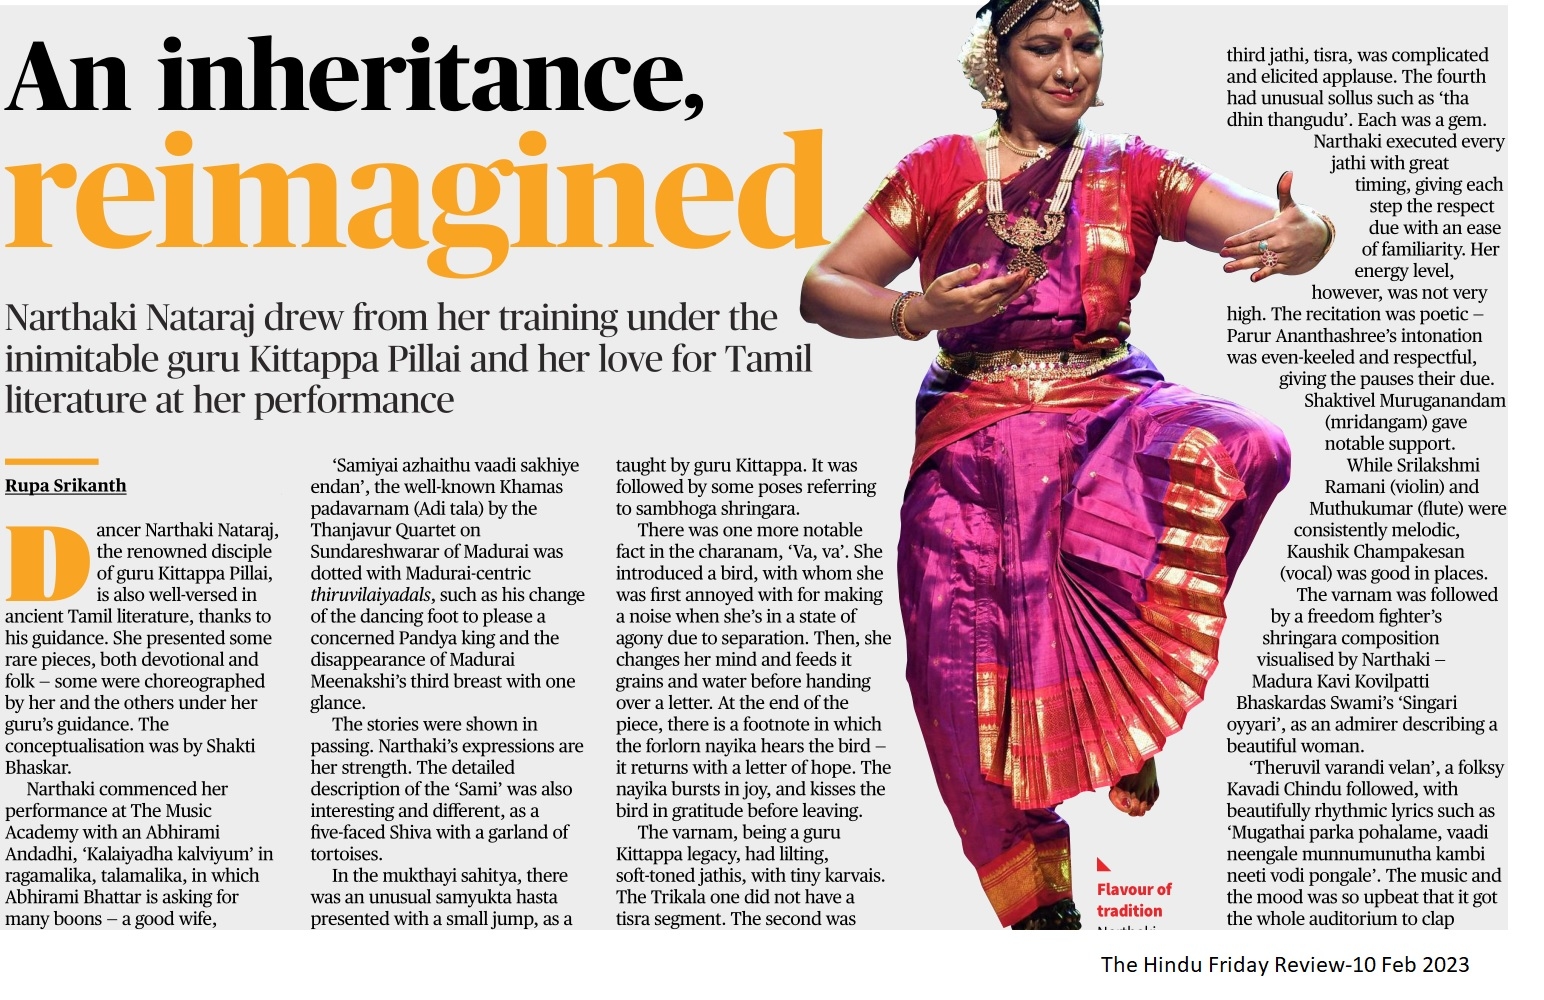 An inheritance reimagined - Rupa Srikanth